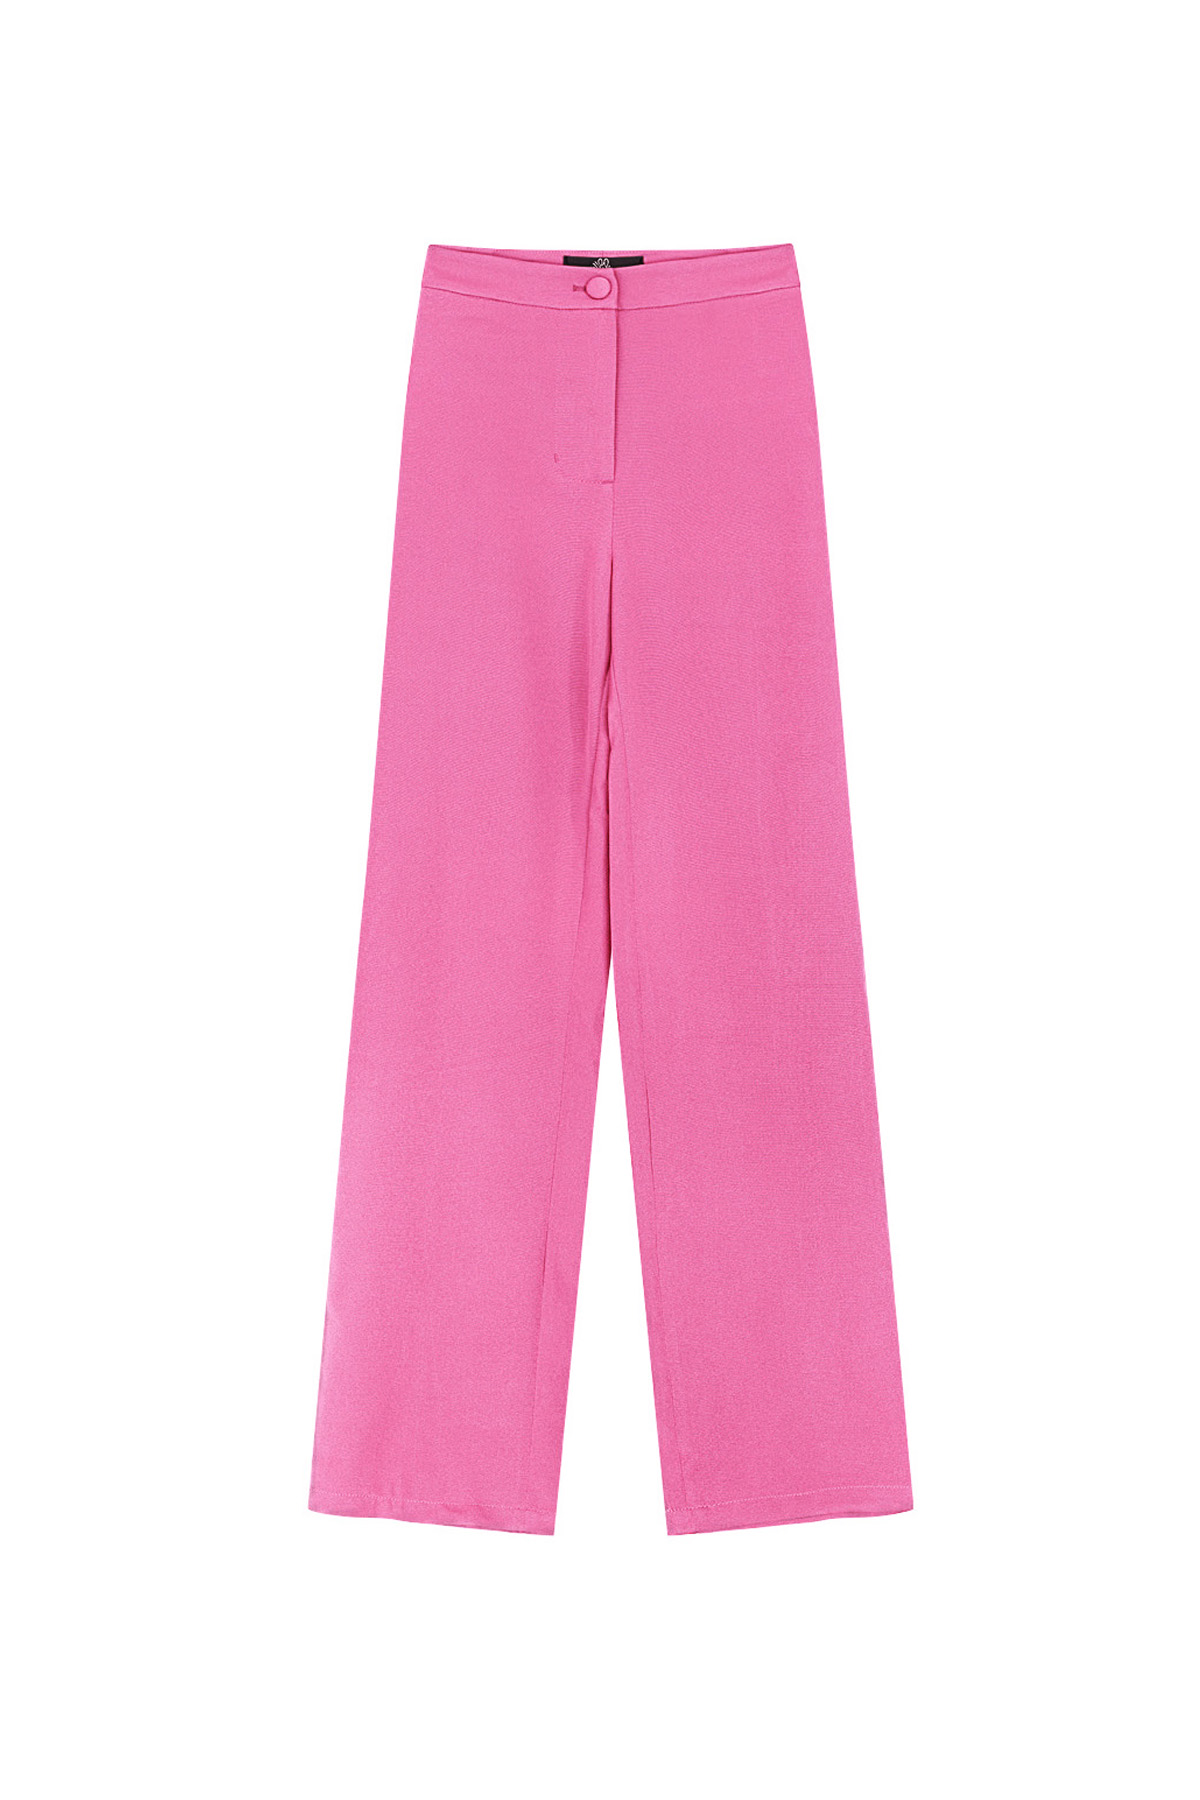 Basic Plain Trousers - Pink 